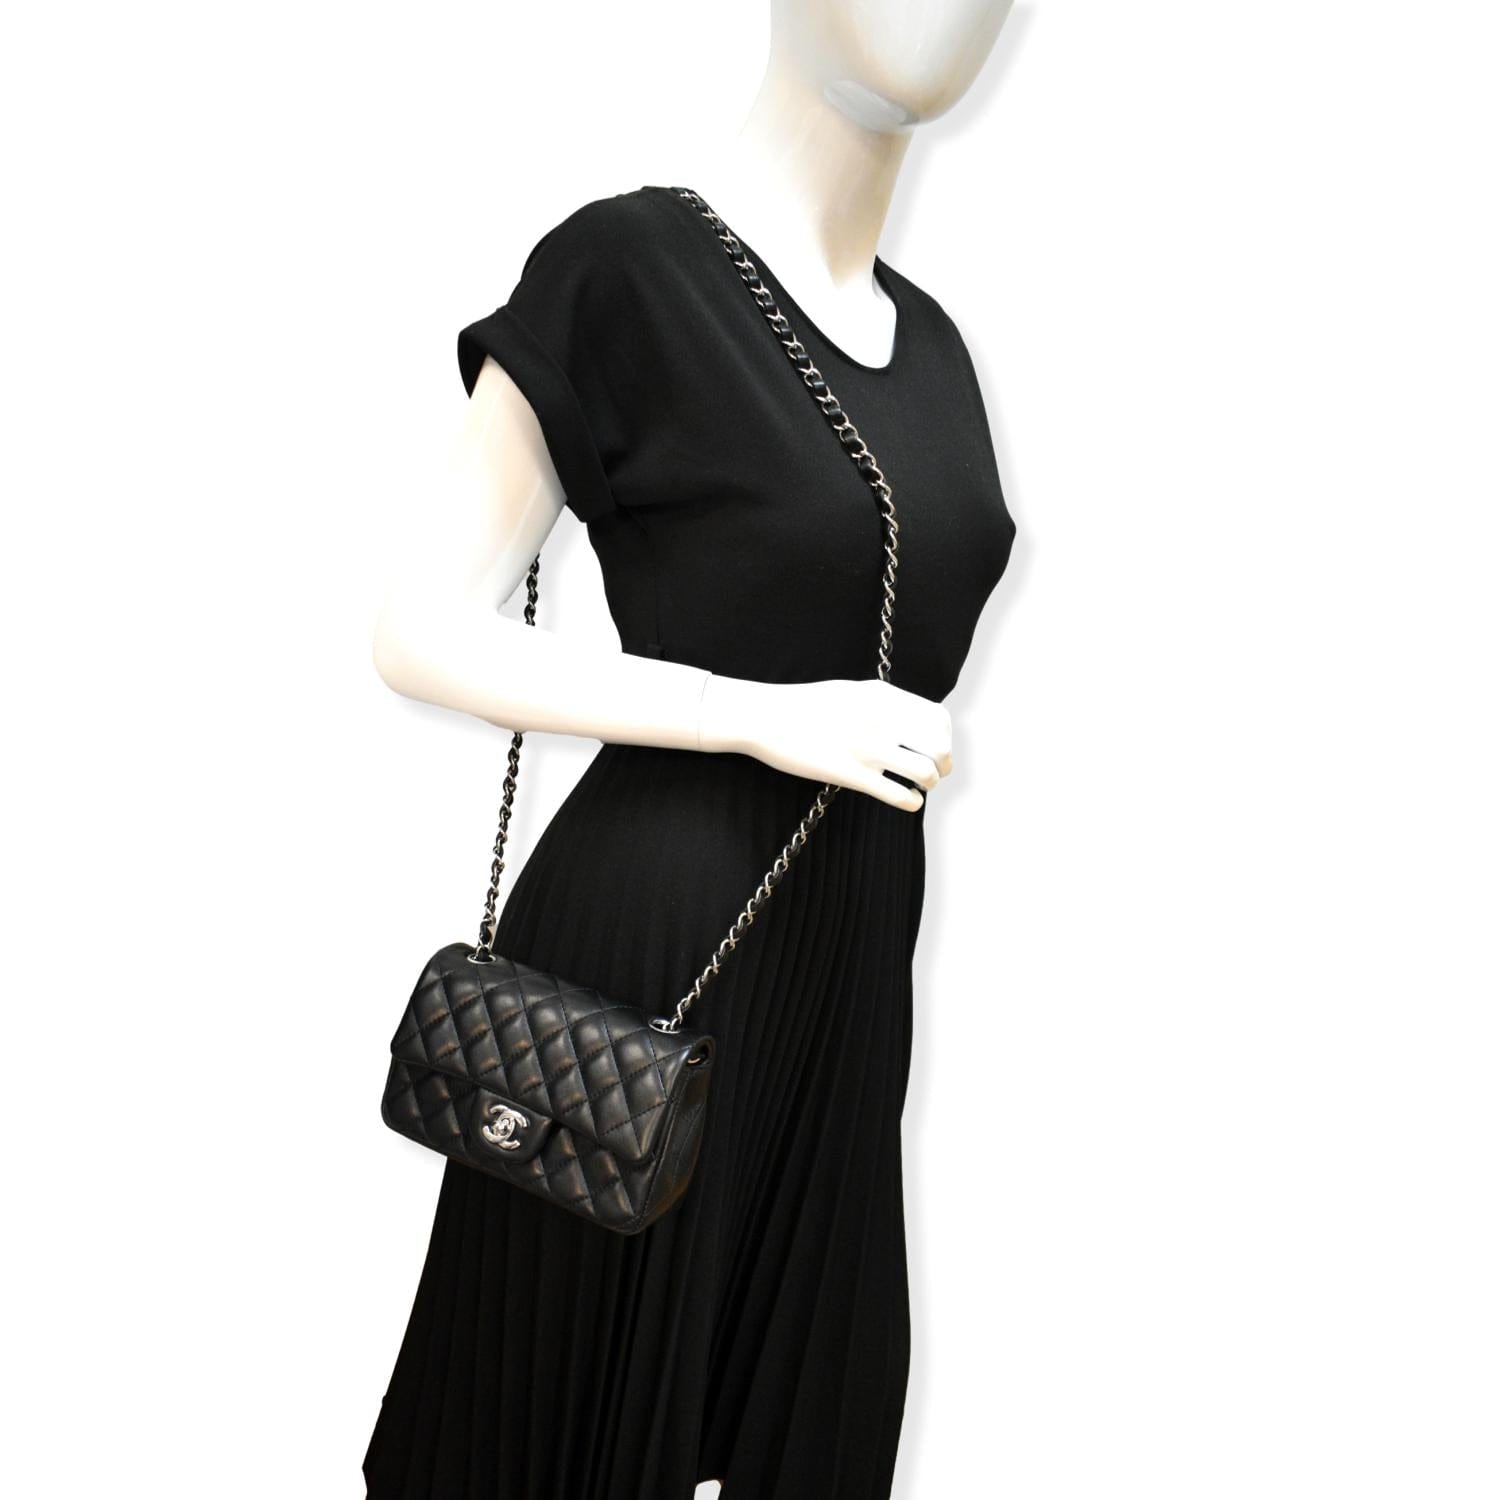 Small classic handbag Embroidered tweed strass glass pearls  goldtone  metal black  Fashion  CHANEL